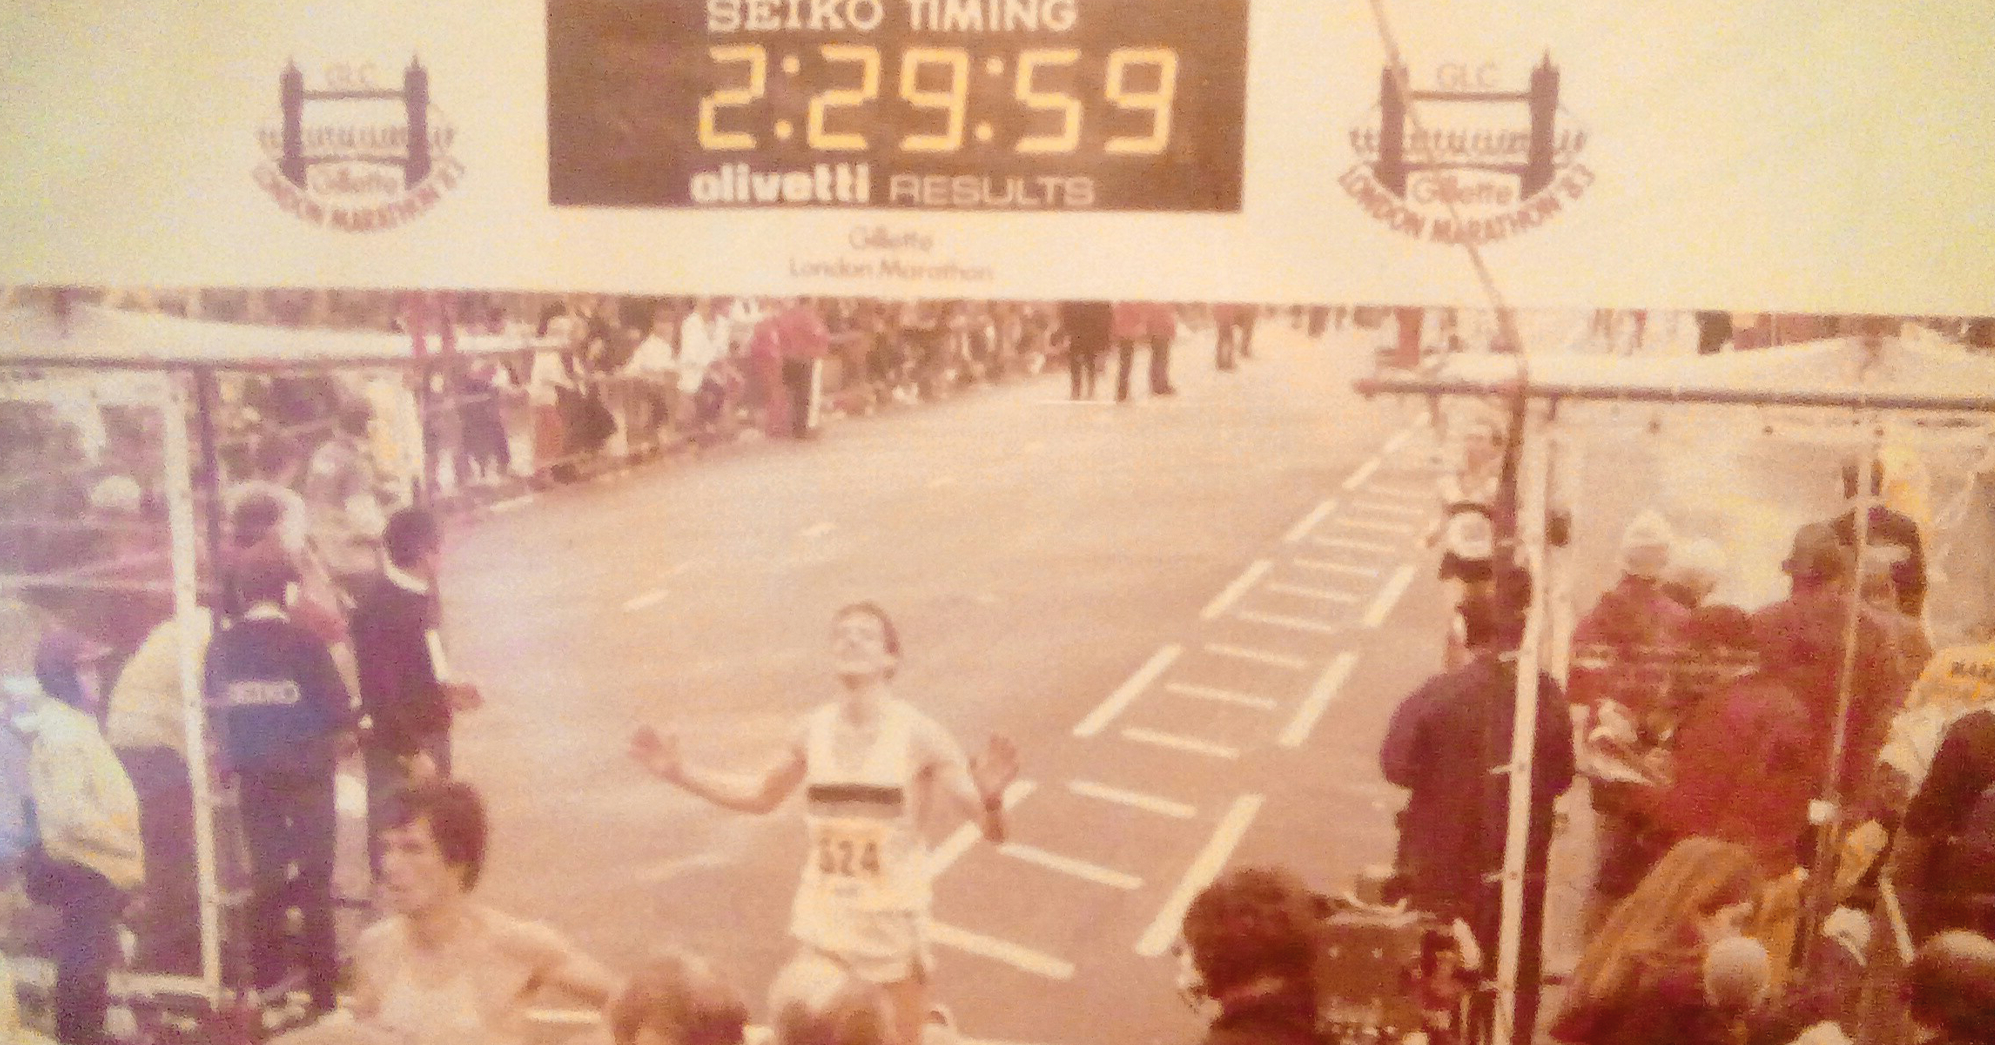 1983 marathon